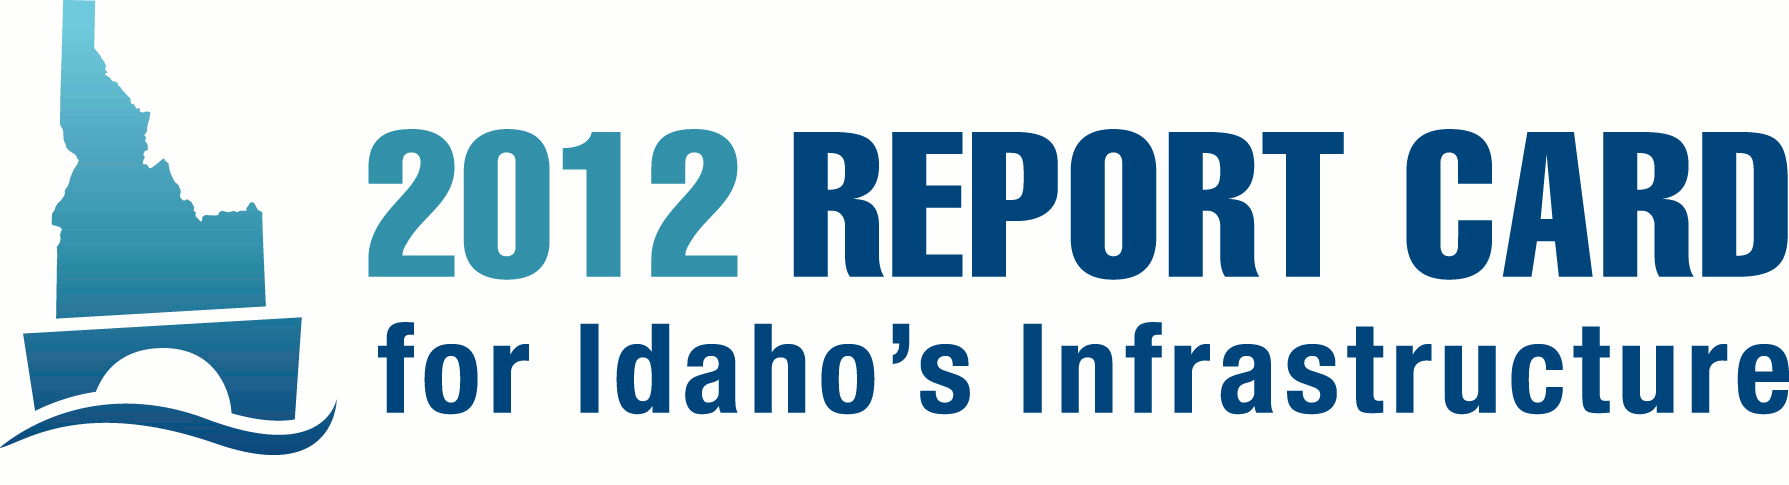 ASCE Idaho Report Card